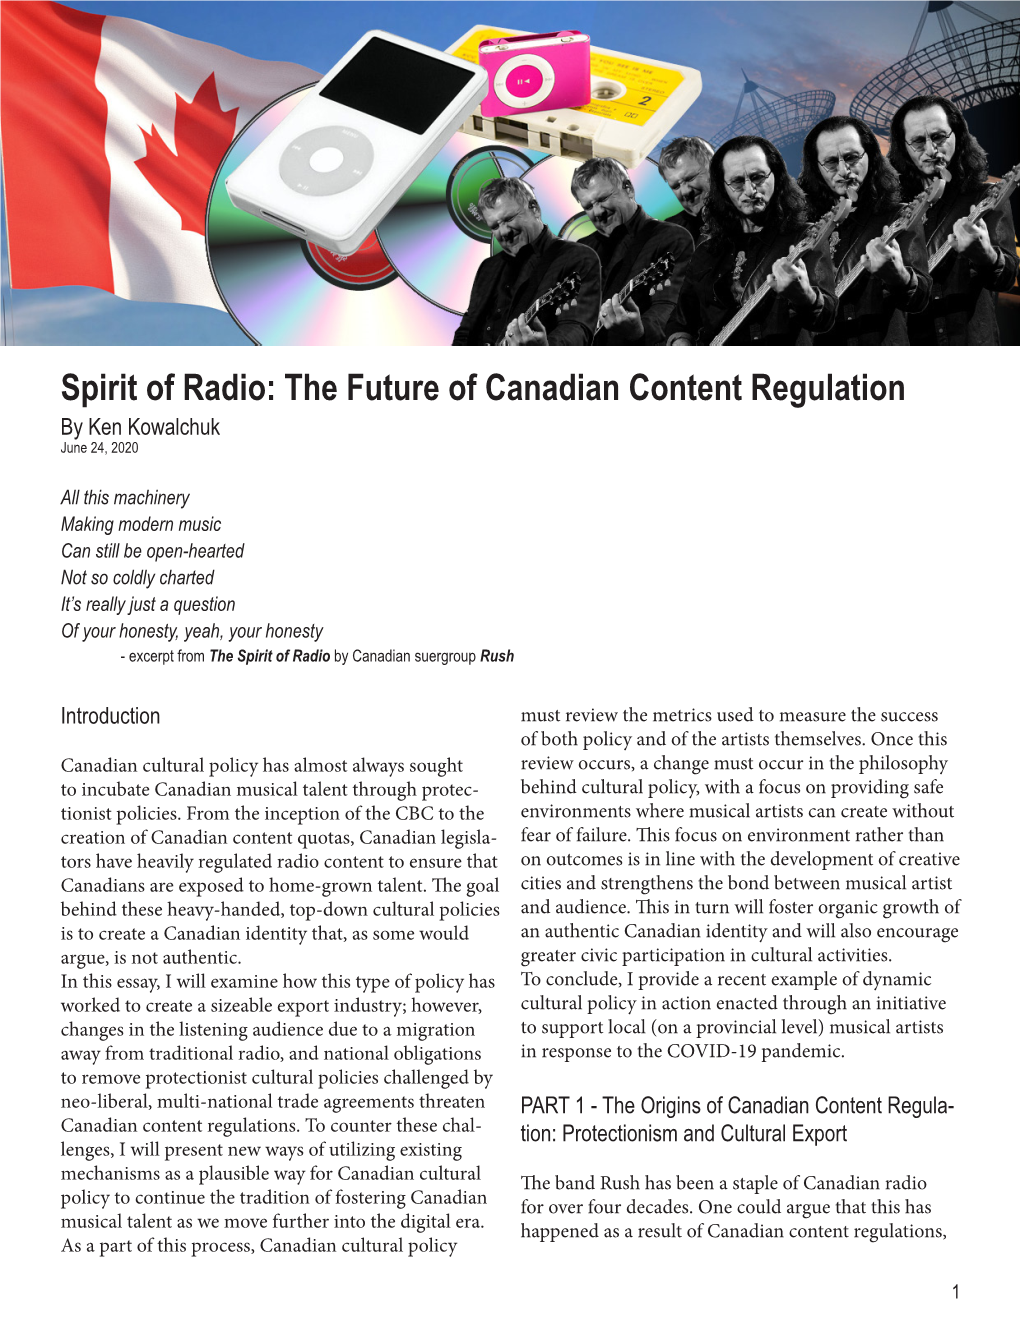 Spirit of Radio: the Future of Canadian Content Regulation by Ken Kowalchuk June 24, 2020